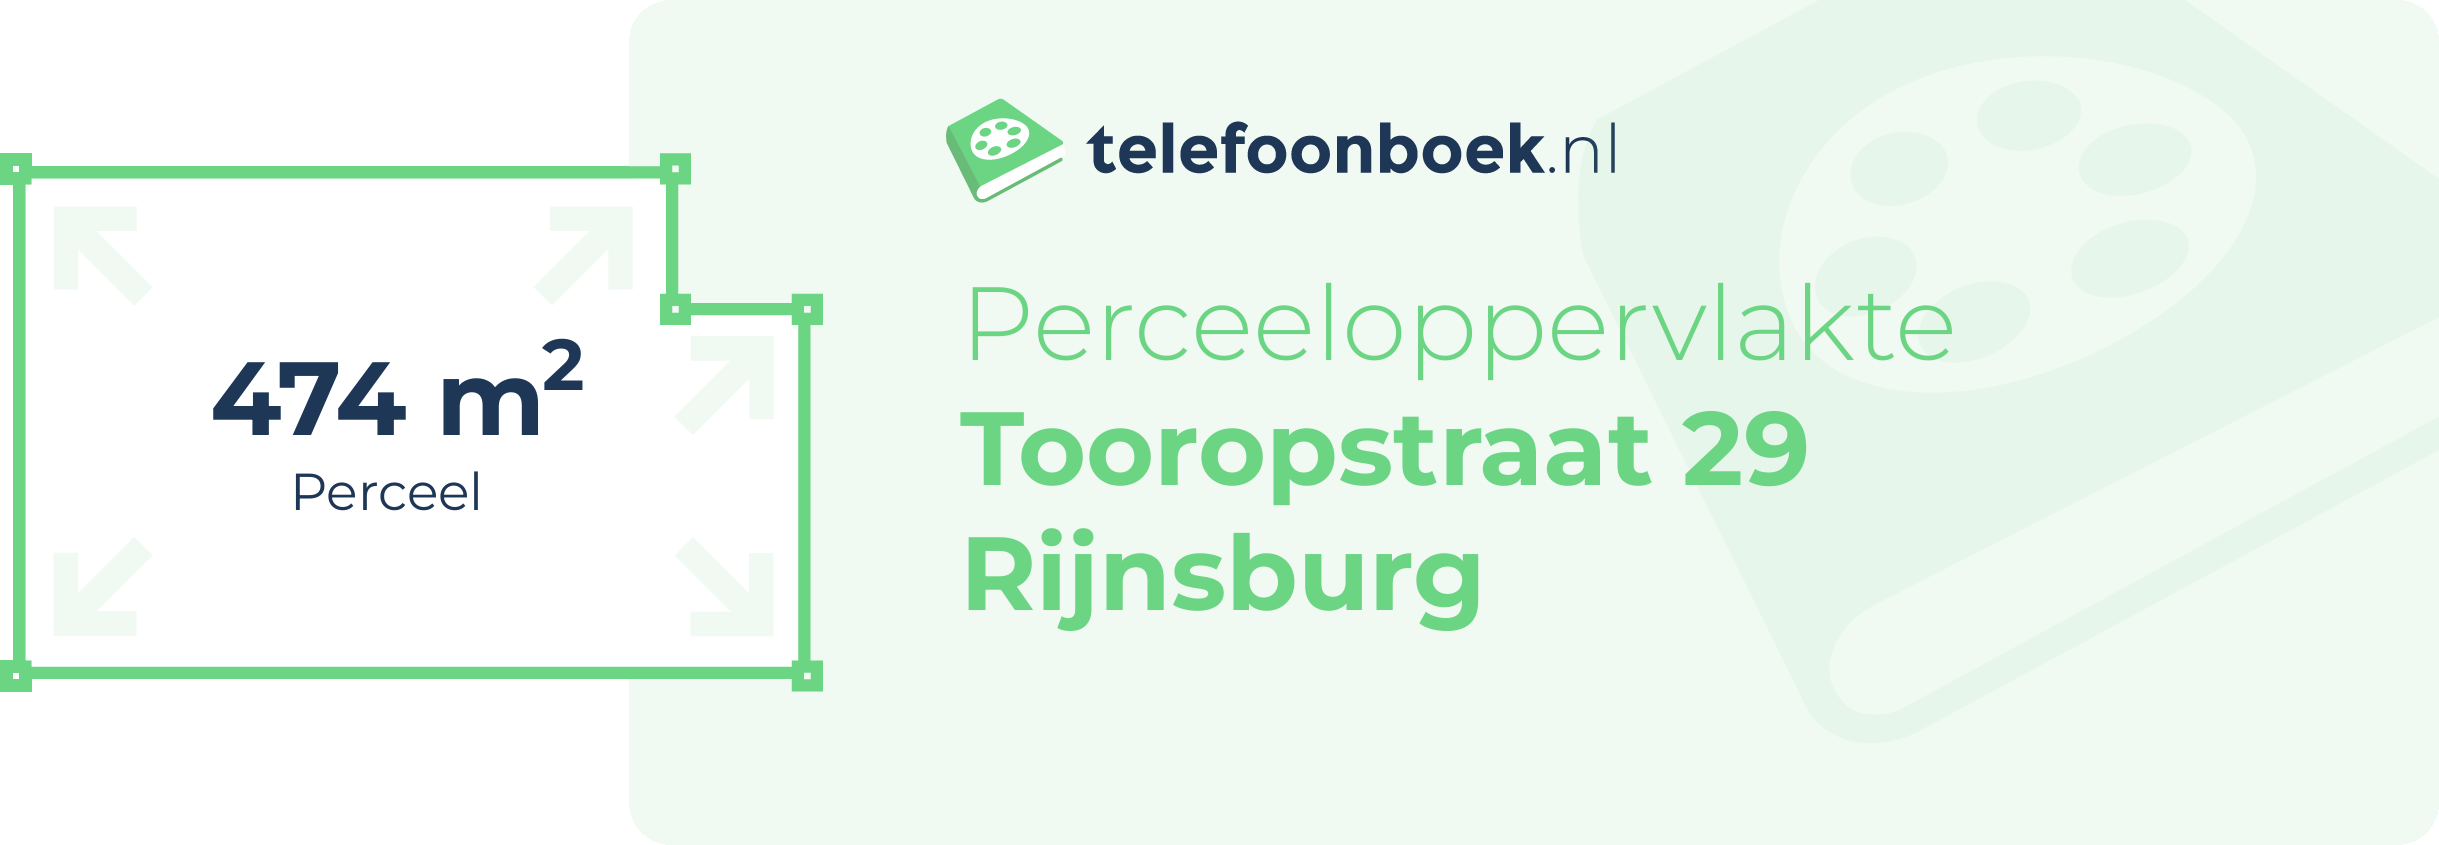 Perceeloppervlakte Tooropstraat 29 Rijnsburg